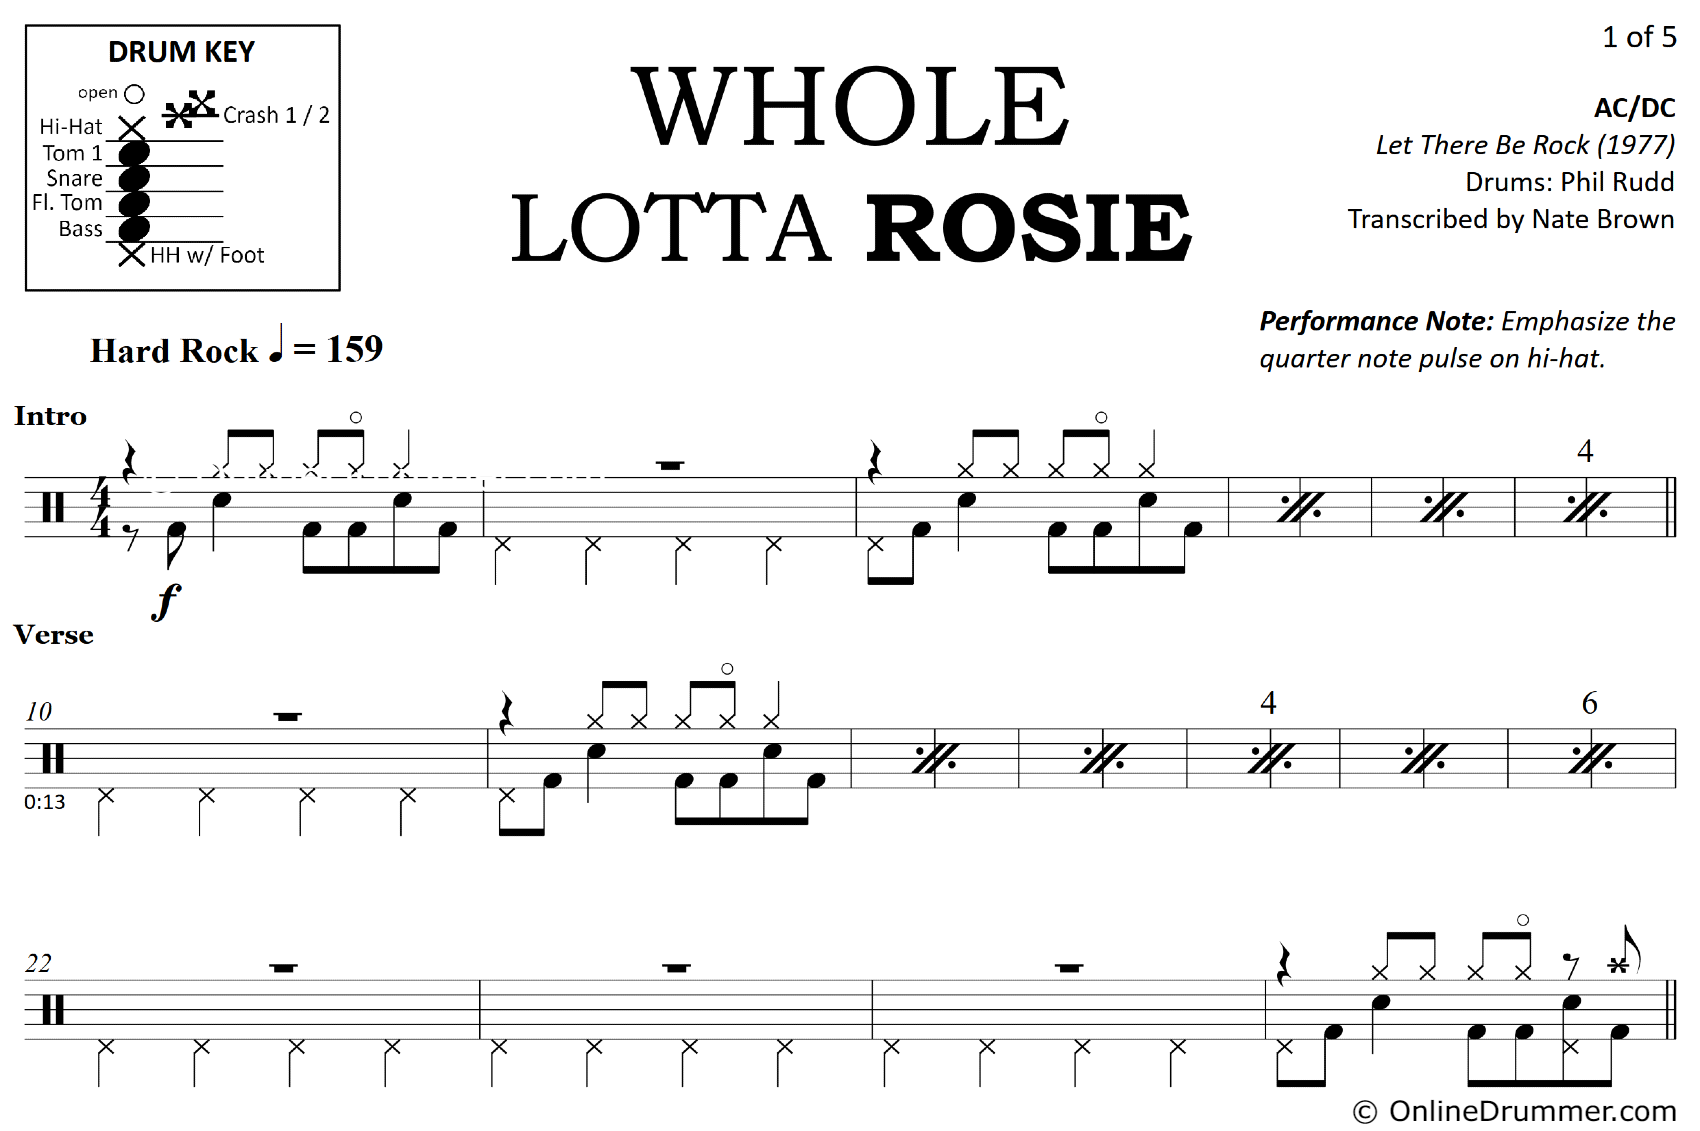 Whole Lotta Rosie - AC/DC - Drum Sheet Music